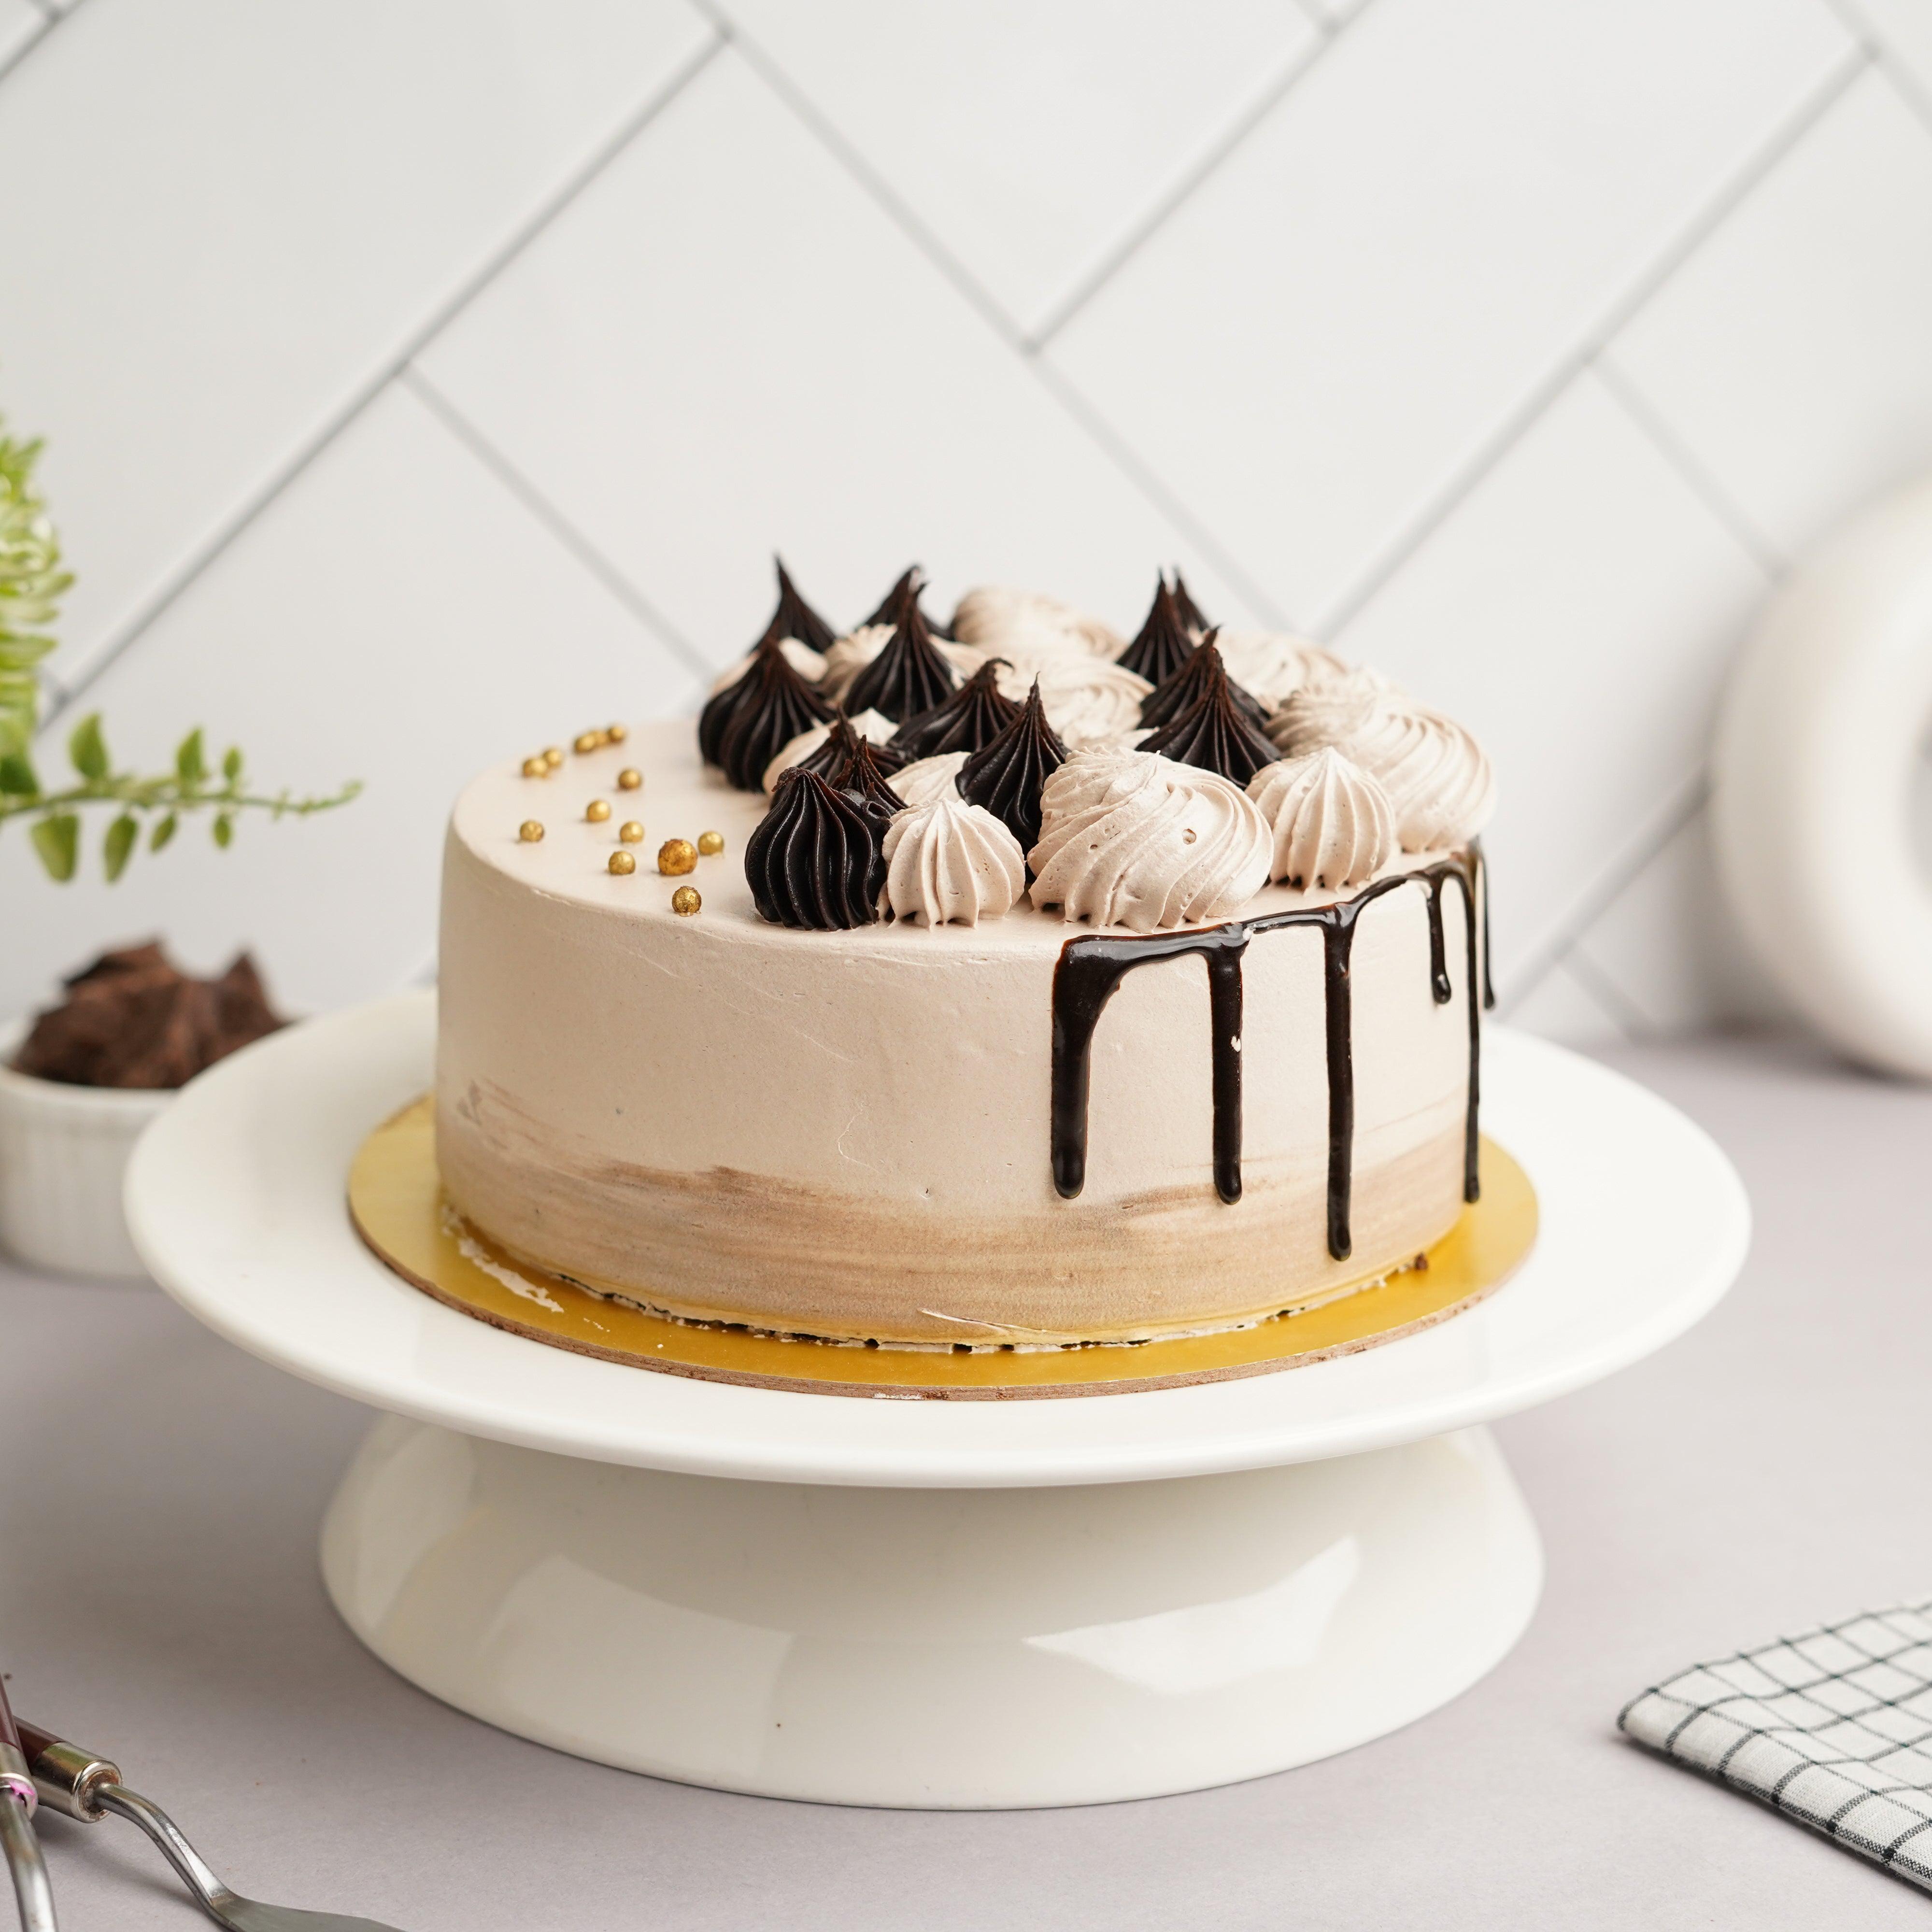 Triple Chocolate Delight Gateau | Order a cake